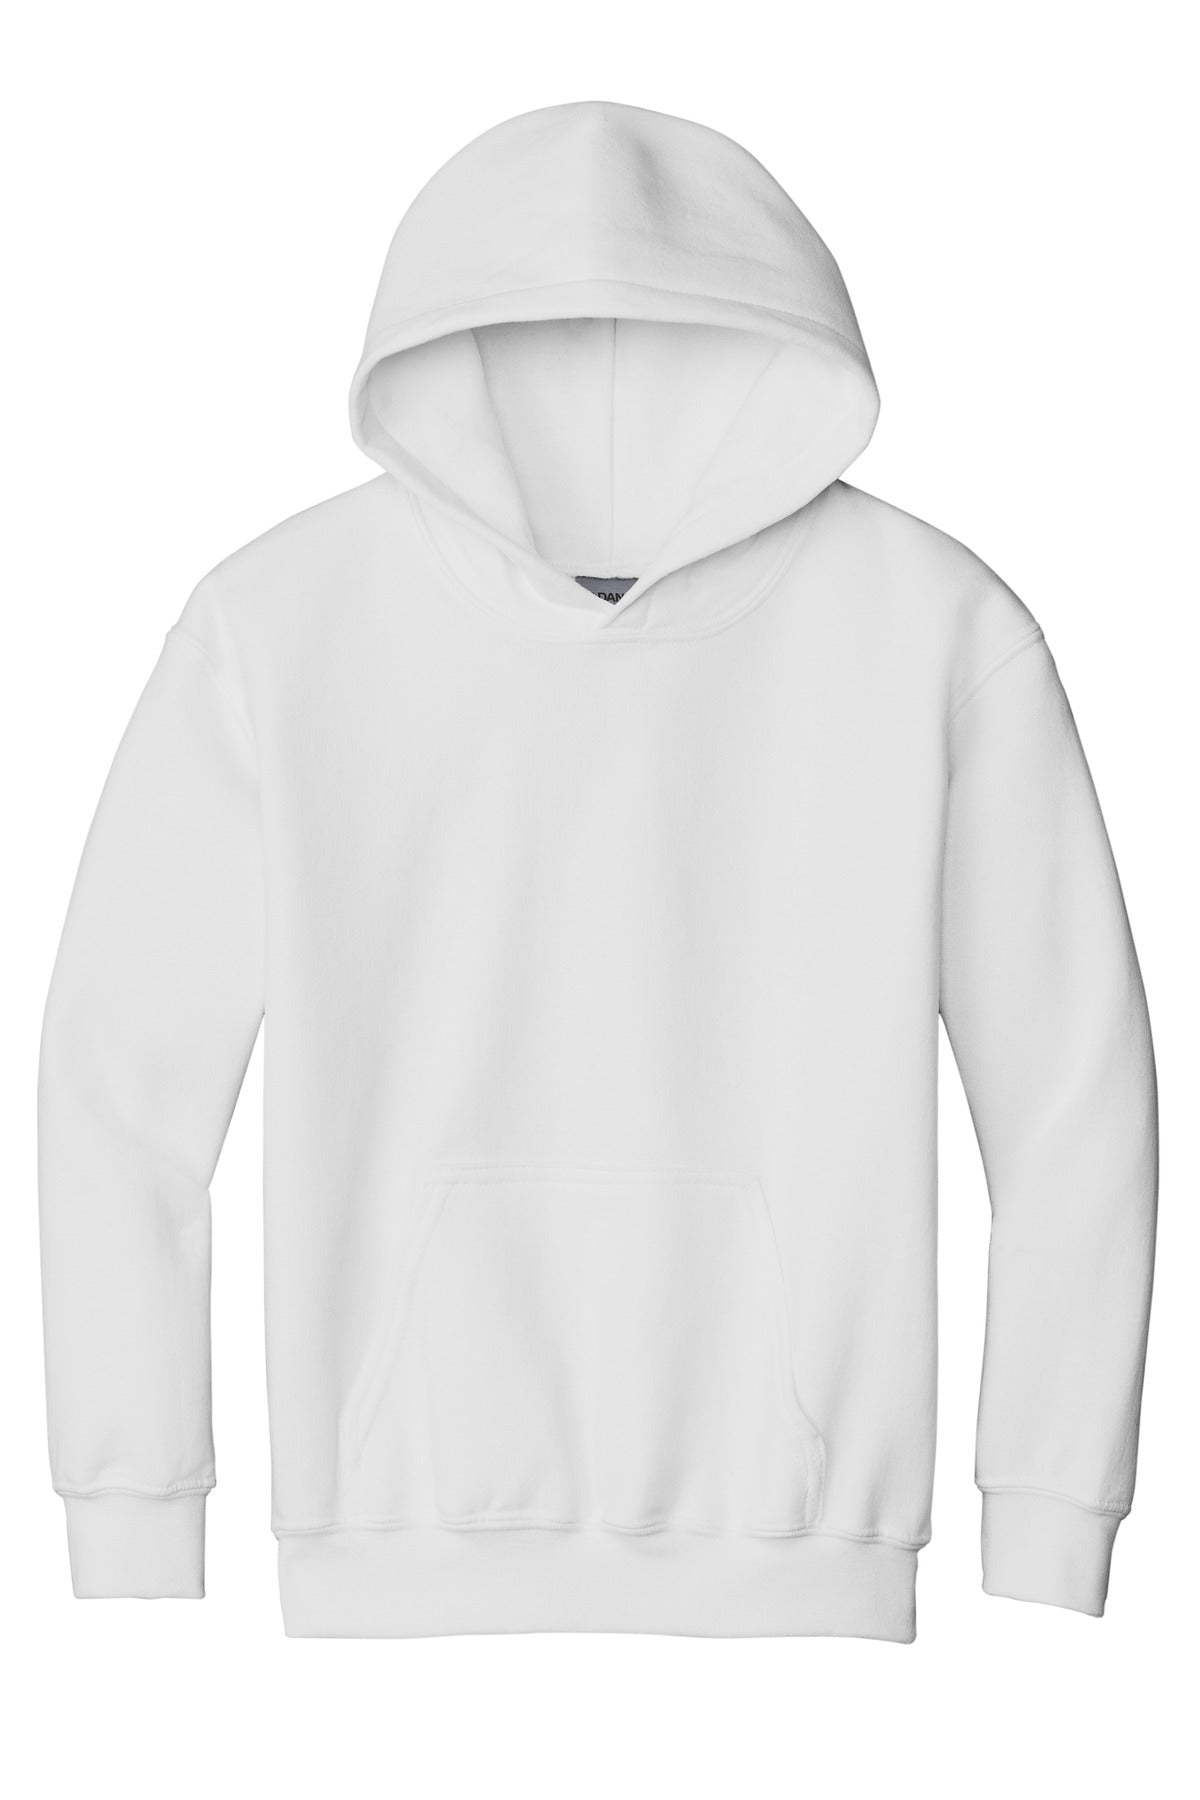 GildanÂ® - Youth Heavy Blendâ„¢ Hooded Sweatshirt. 18500B